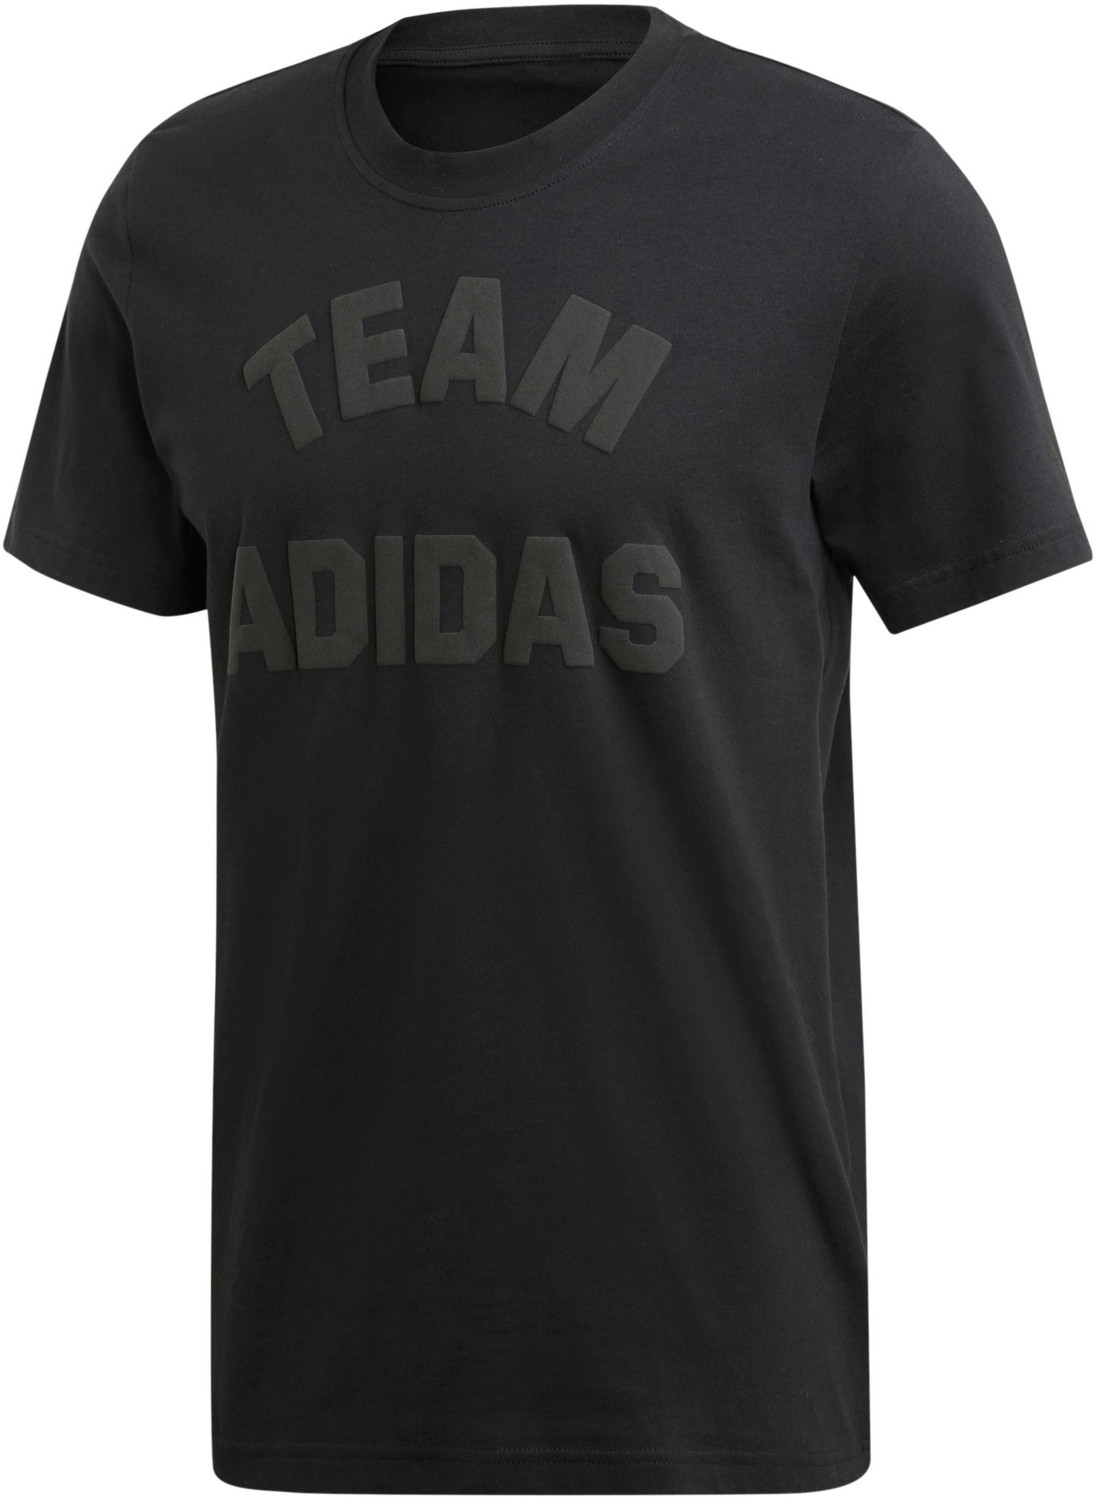 Adidas VRCT T-Shirt black